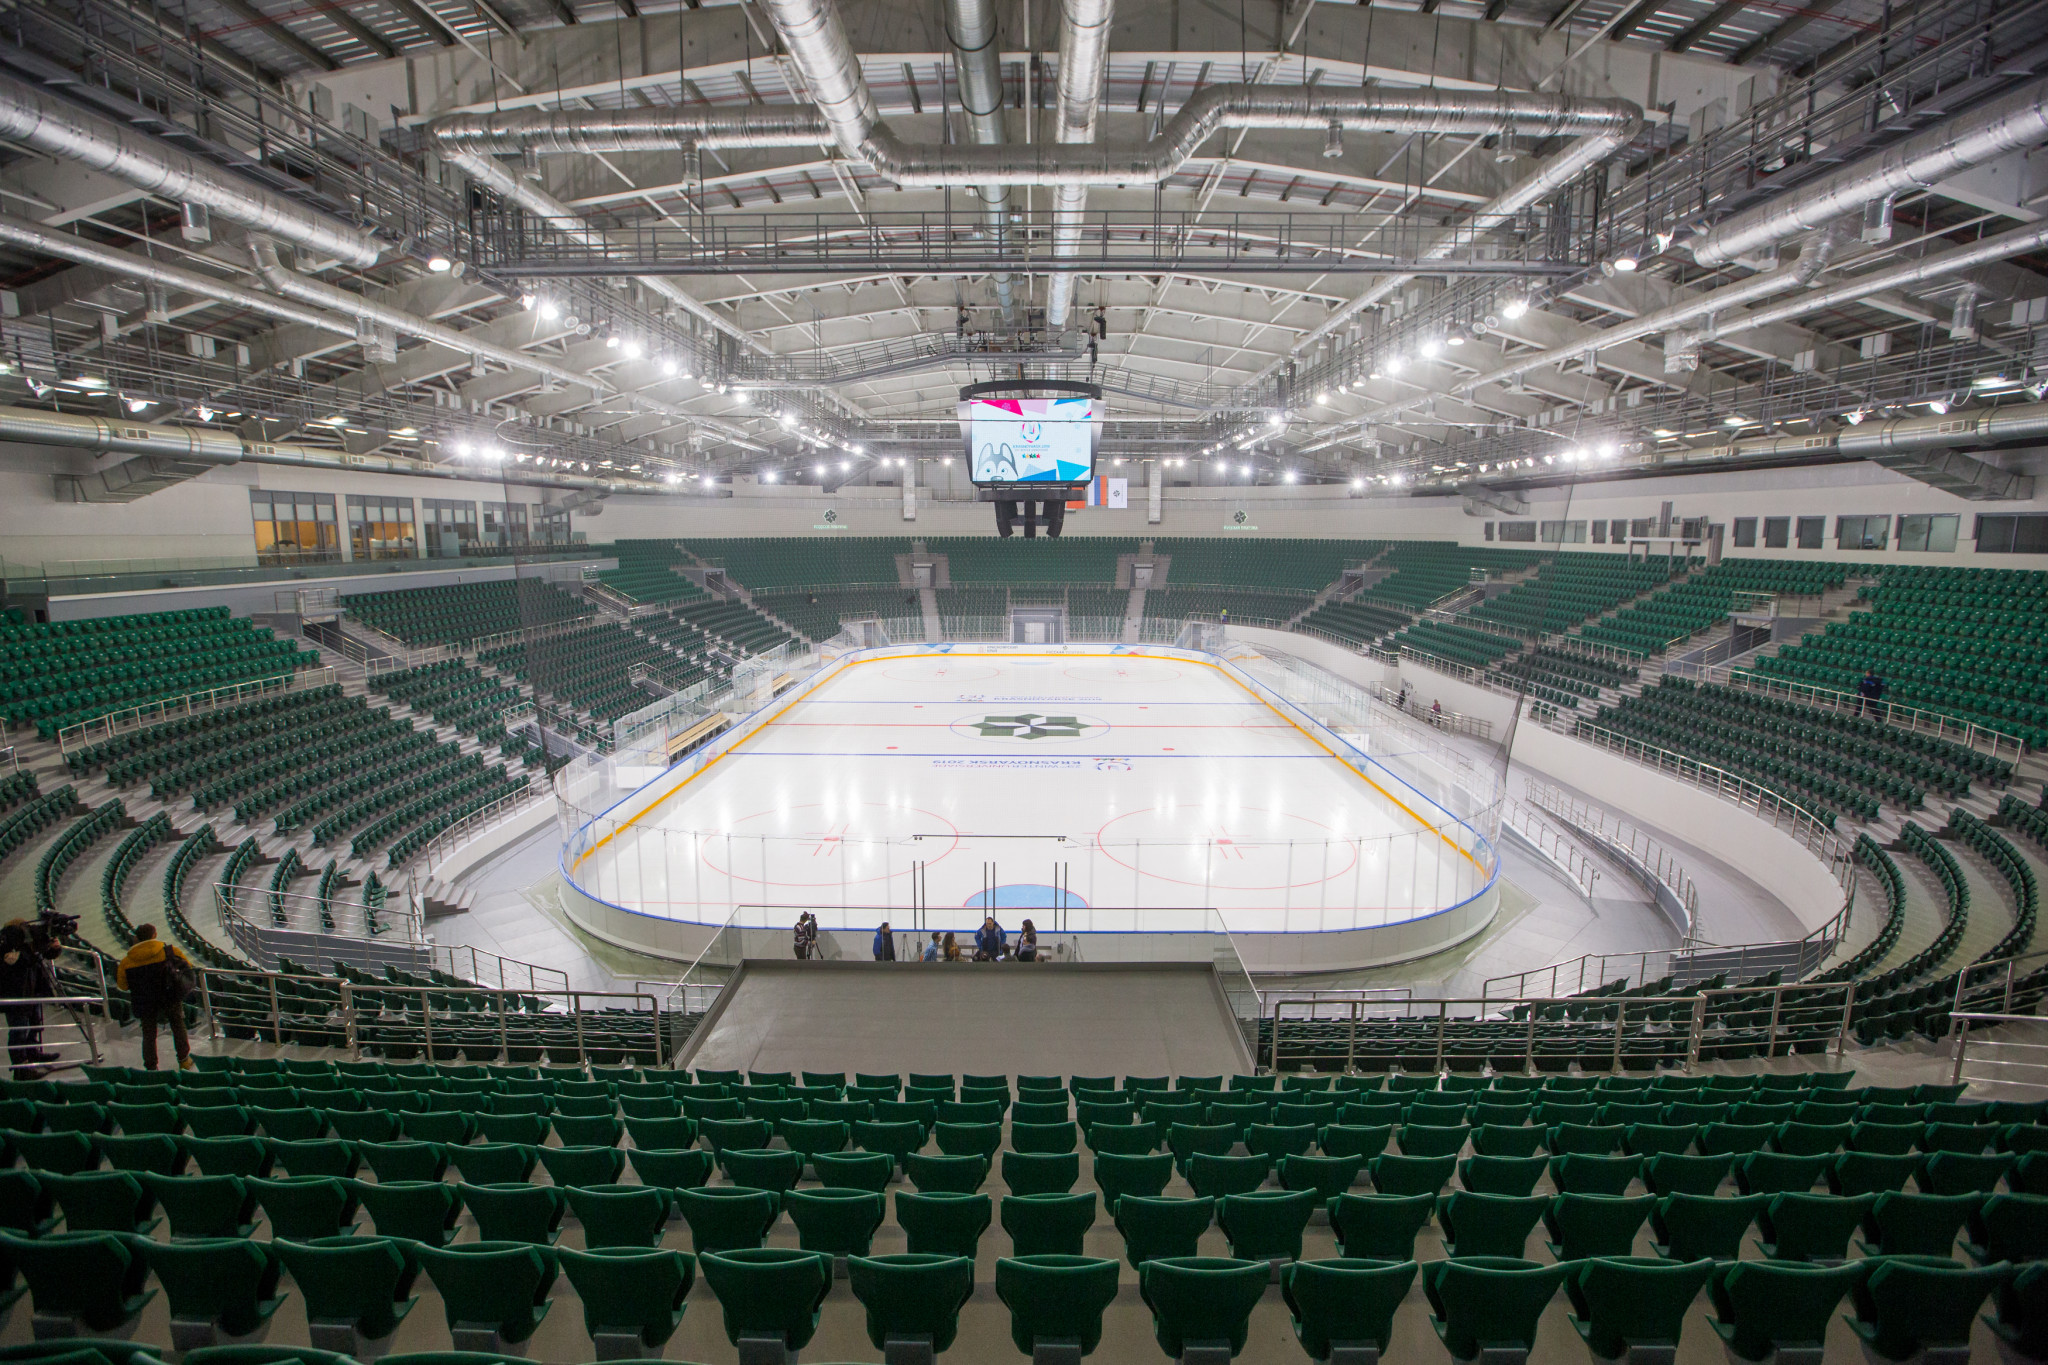 The Krasnoyarsk 2019 Winter Universiade figure skating competition will take place at the Platinum Arena ©Krasnoyarsk 2019